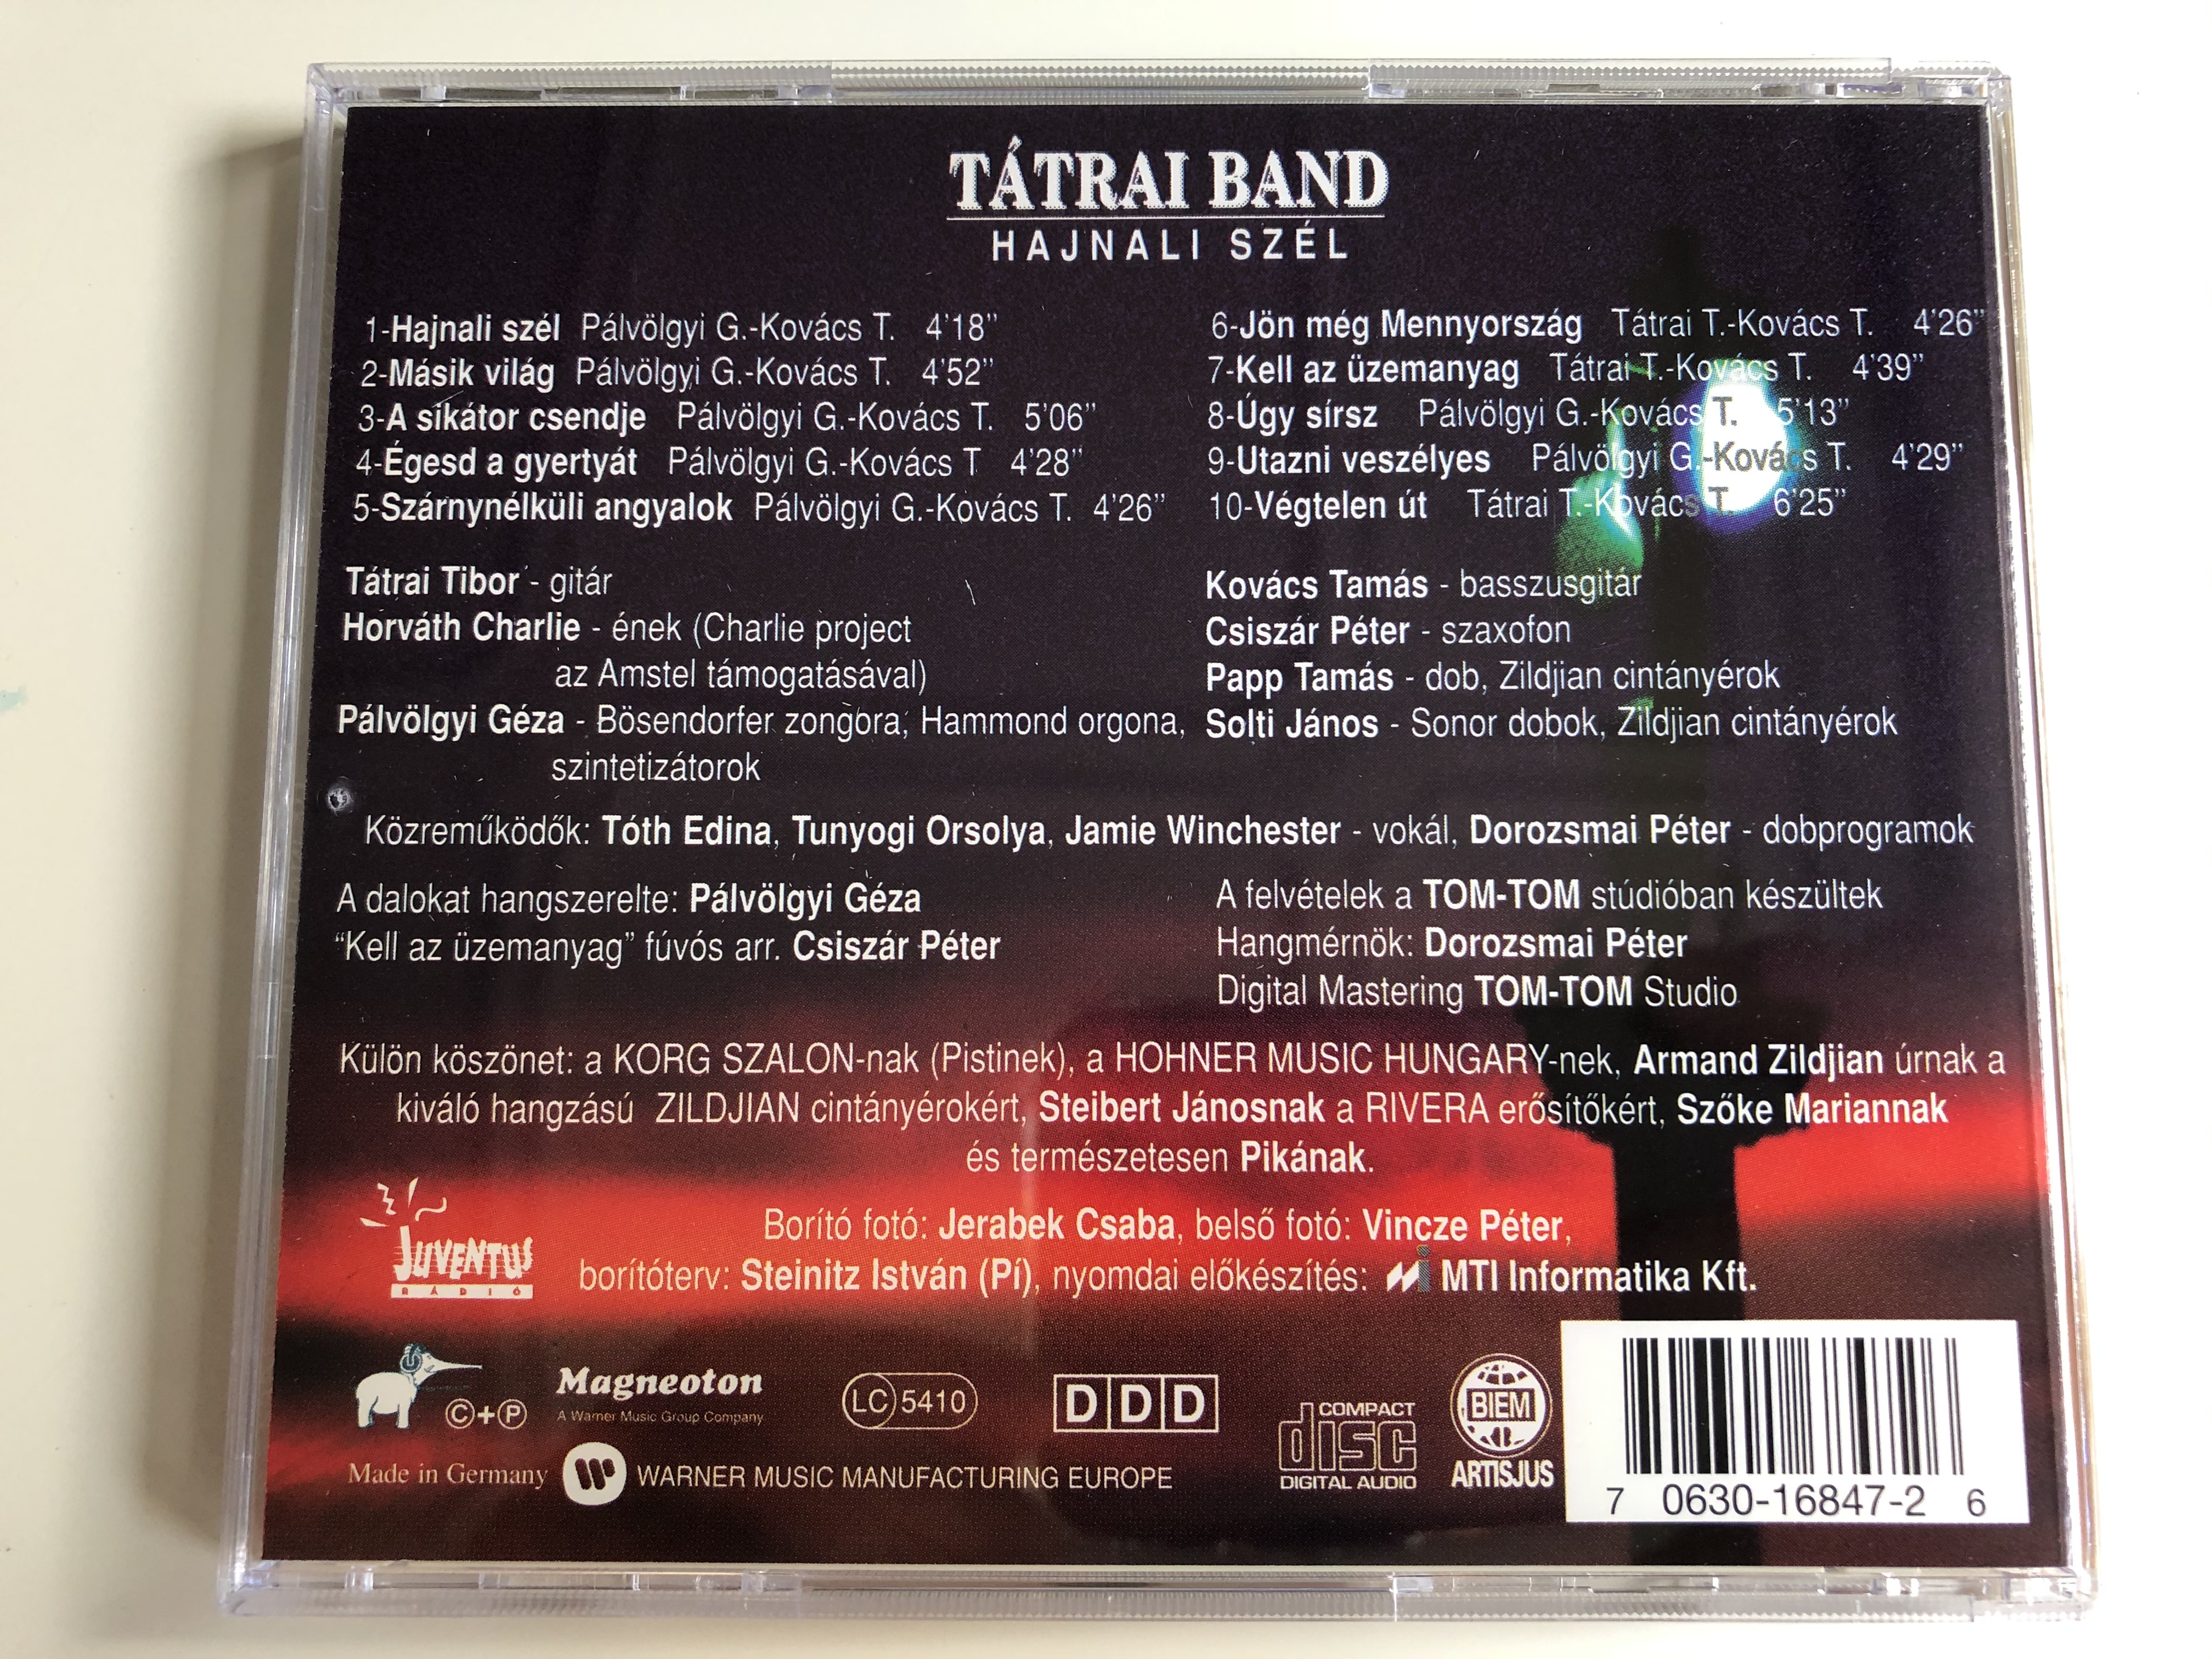 t-trai-band-hajnali-sz-l-magneoton-audio-cd-0630-16847-2-8-.jpg